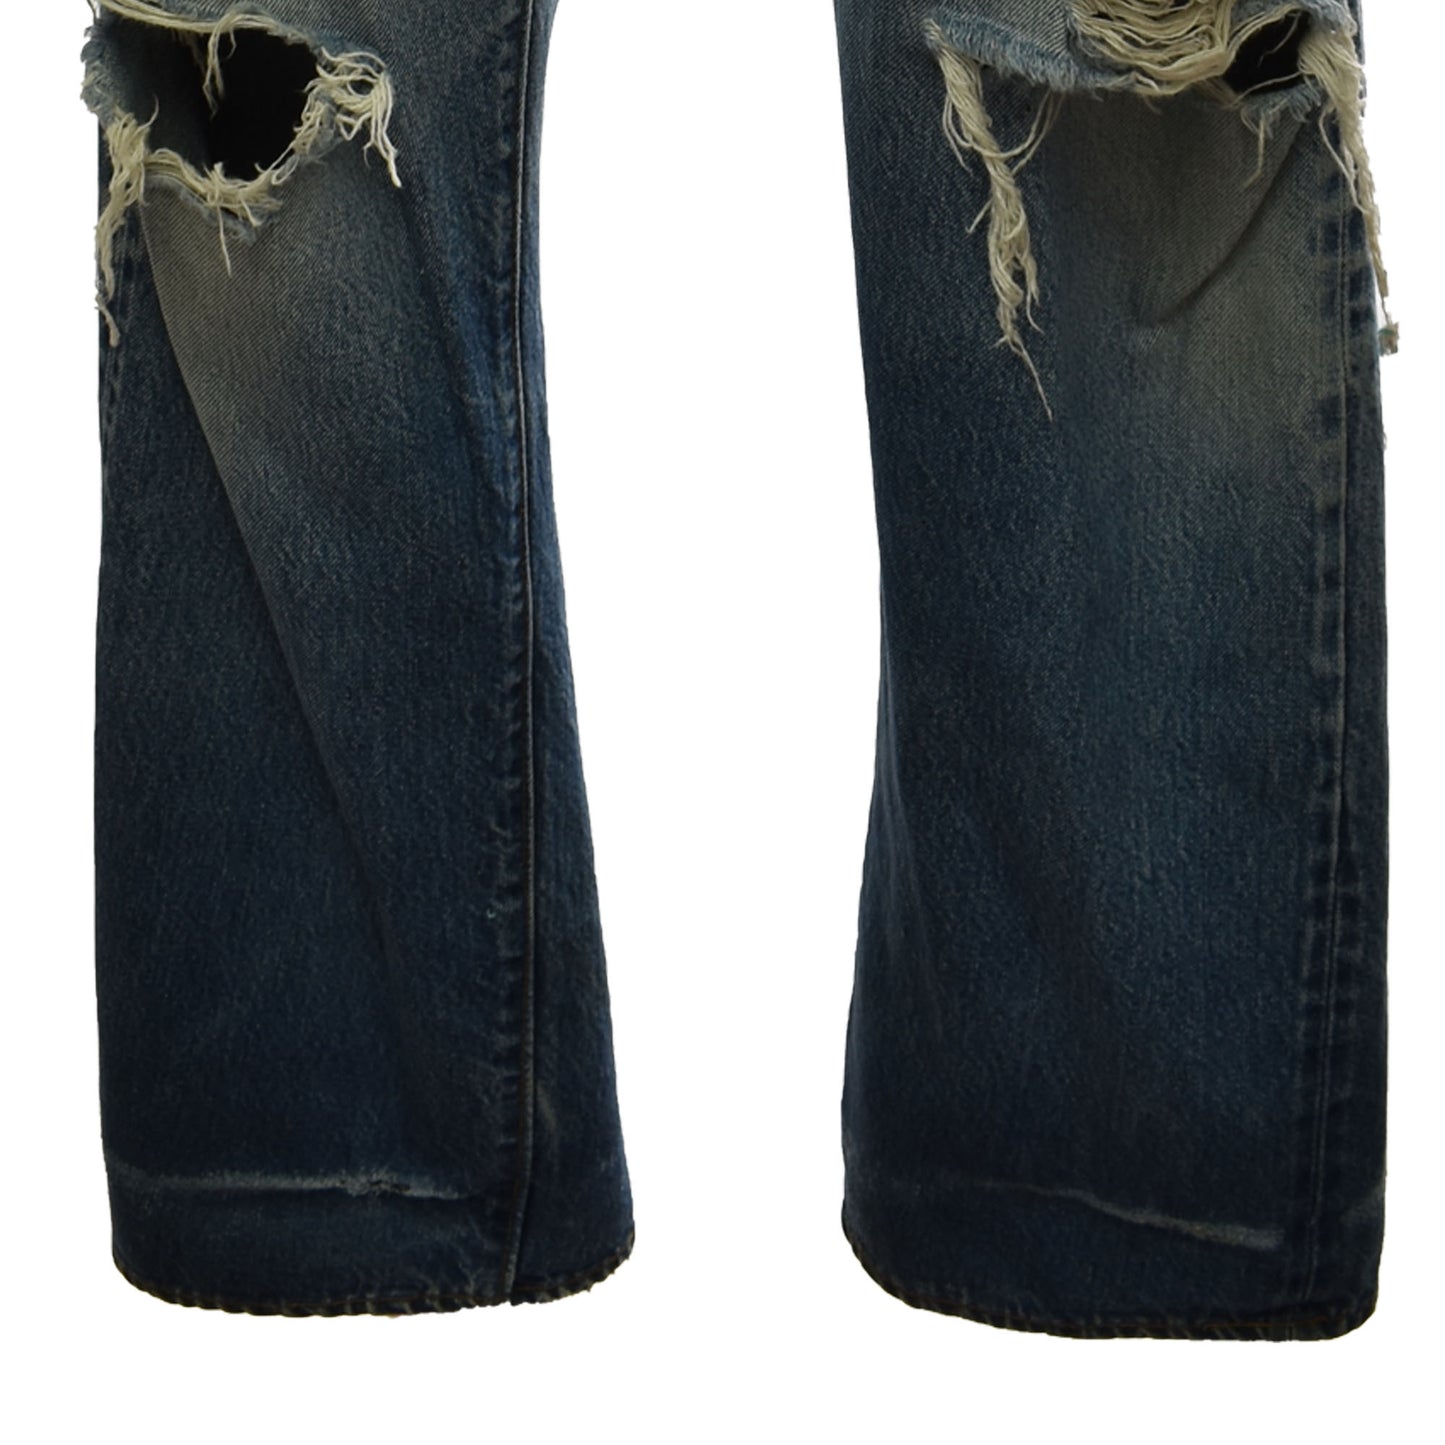 Vintage 90s Levi's 501 Redline Selvedge Jeans - Light Wash Button Fly